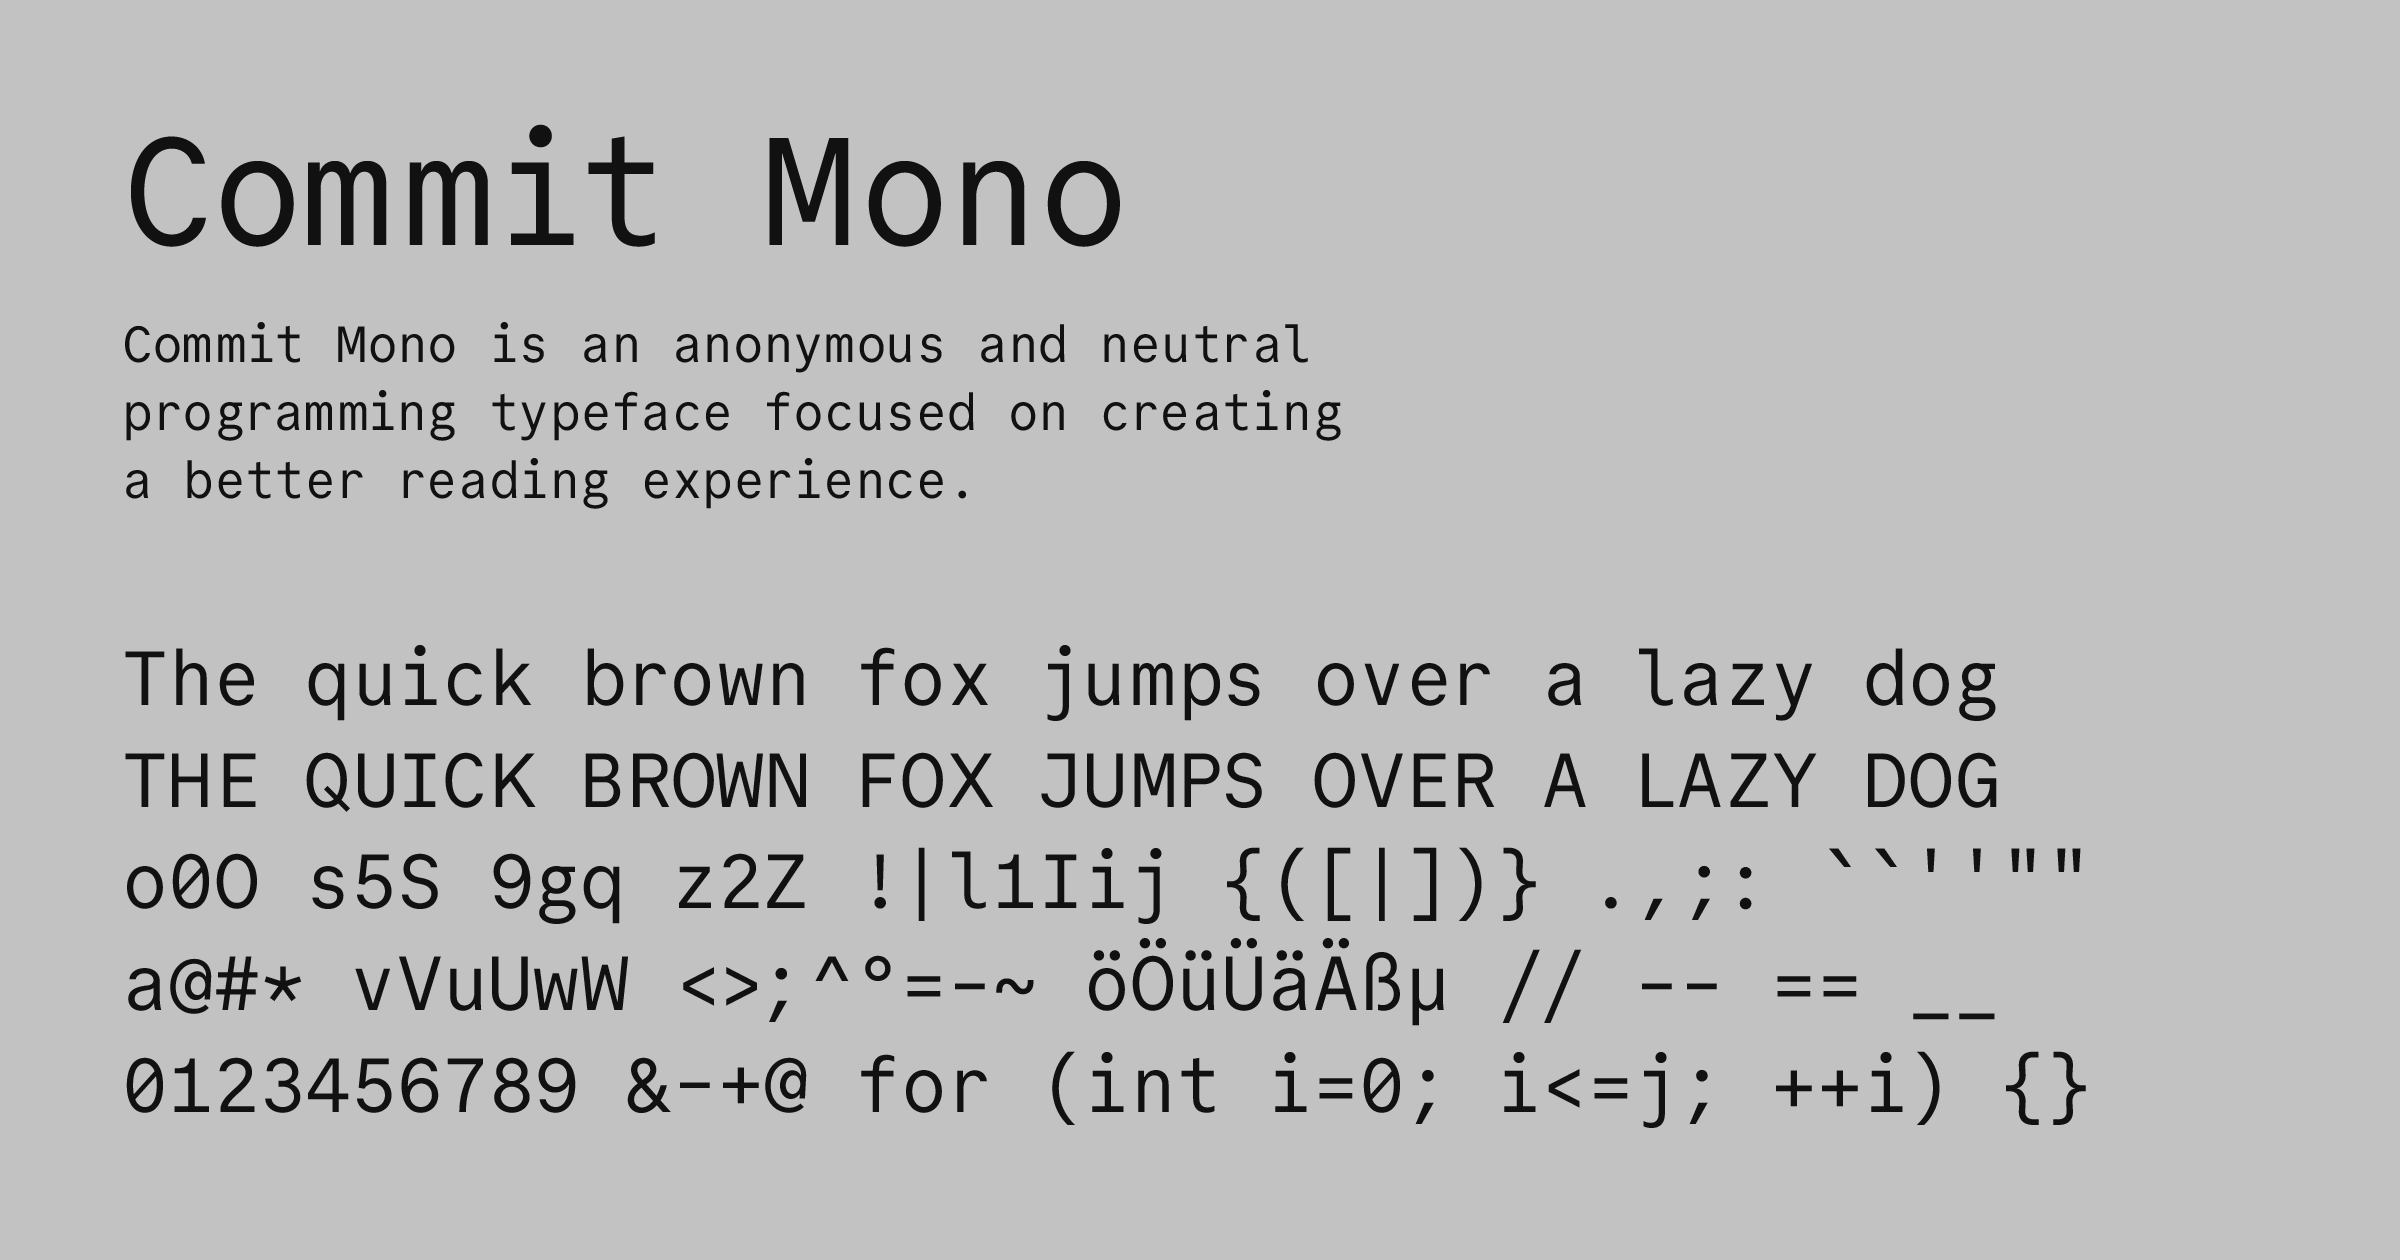 Commit Mono concept image